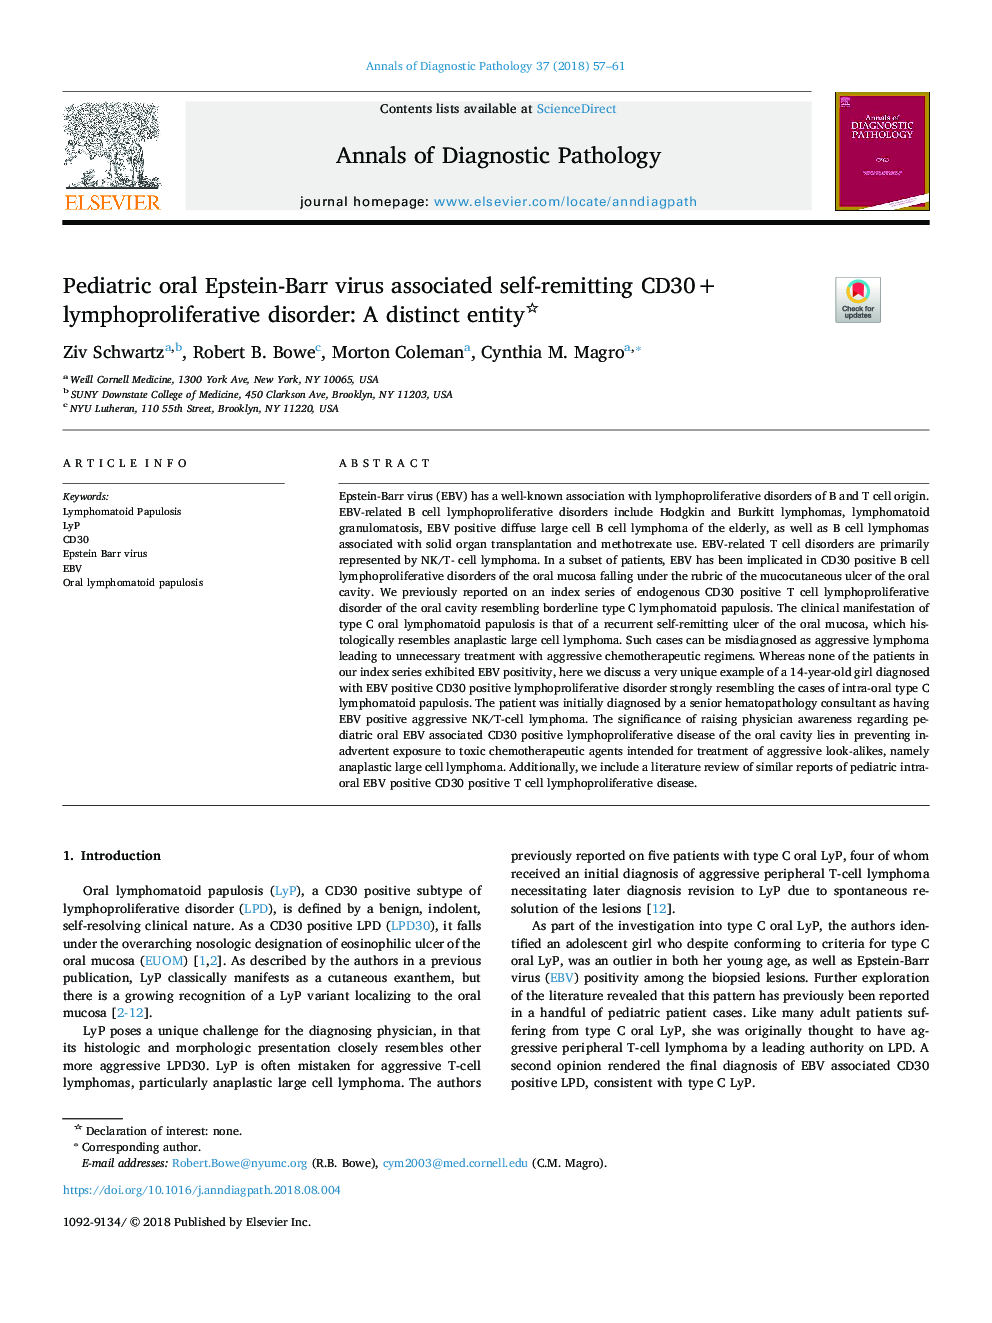 Pediatric oral Epstein-Barr virus associated self-remitting CD30+ lymphoproliferative disorder: A distinct entity